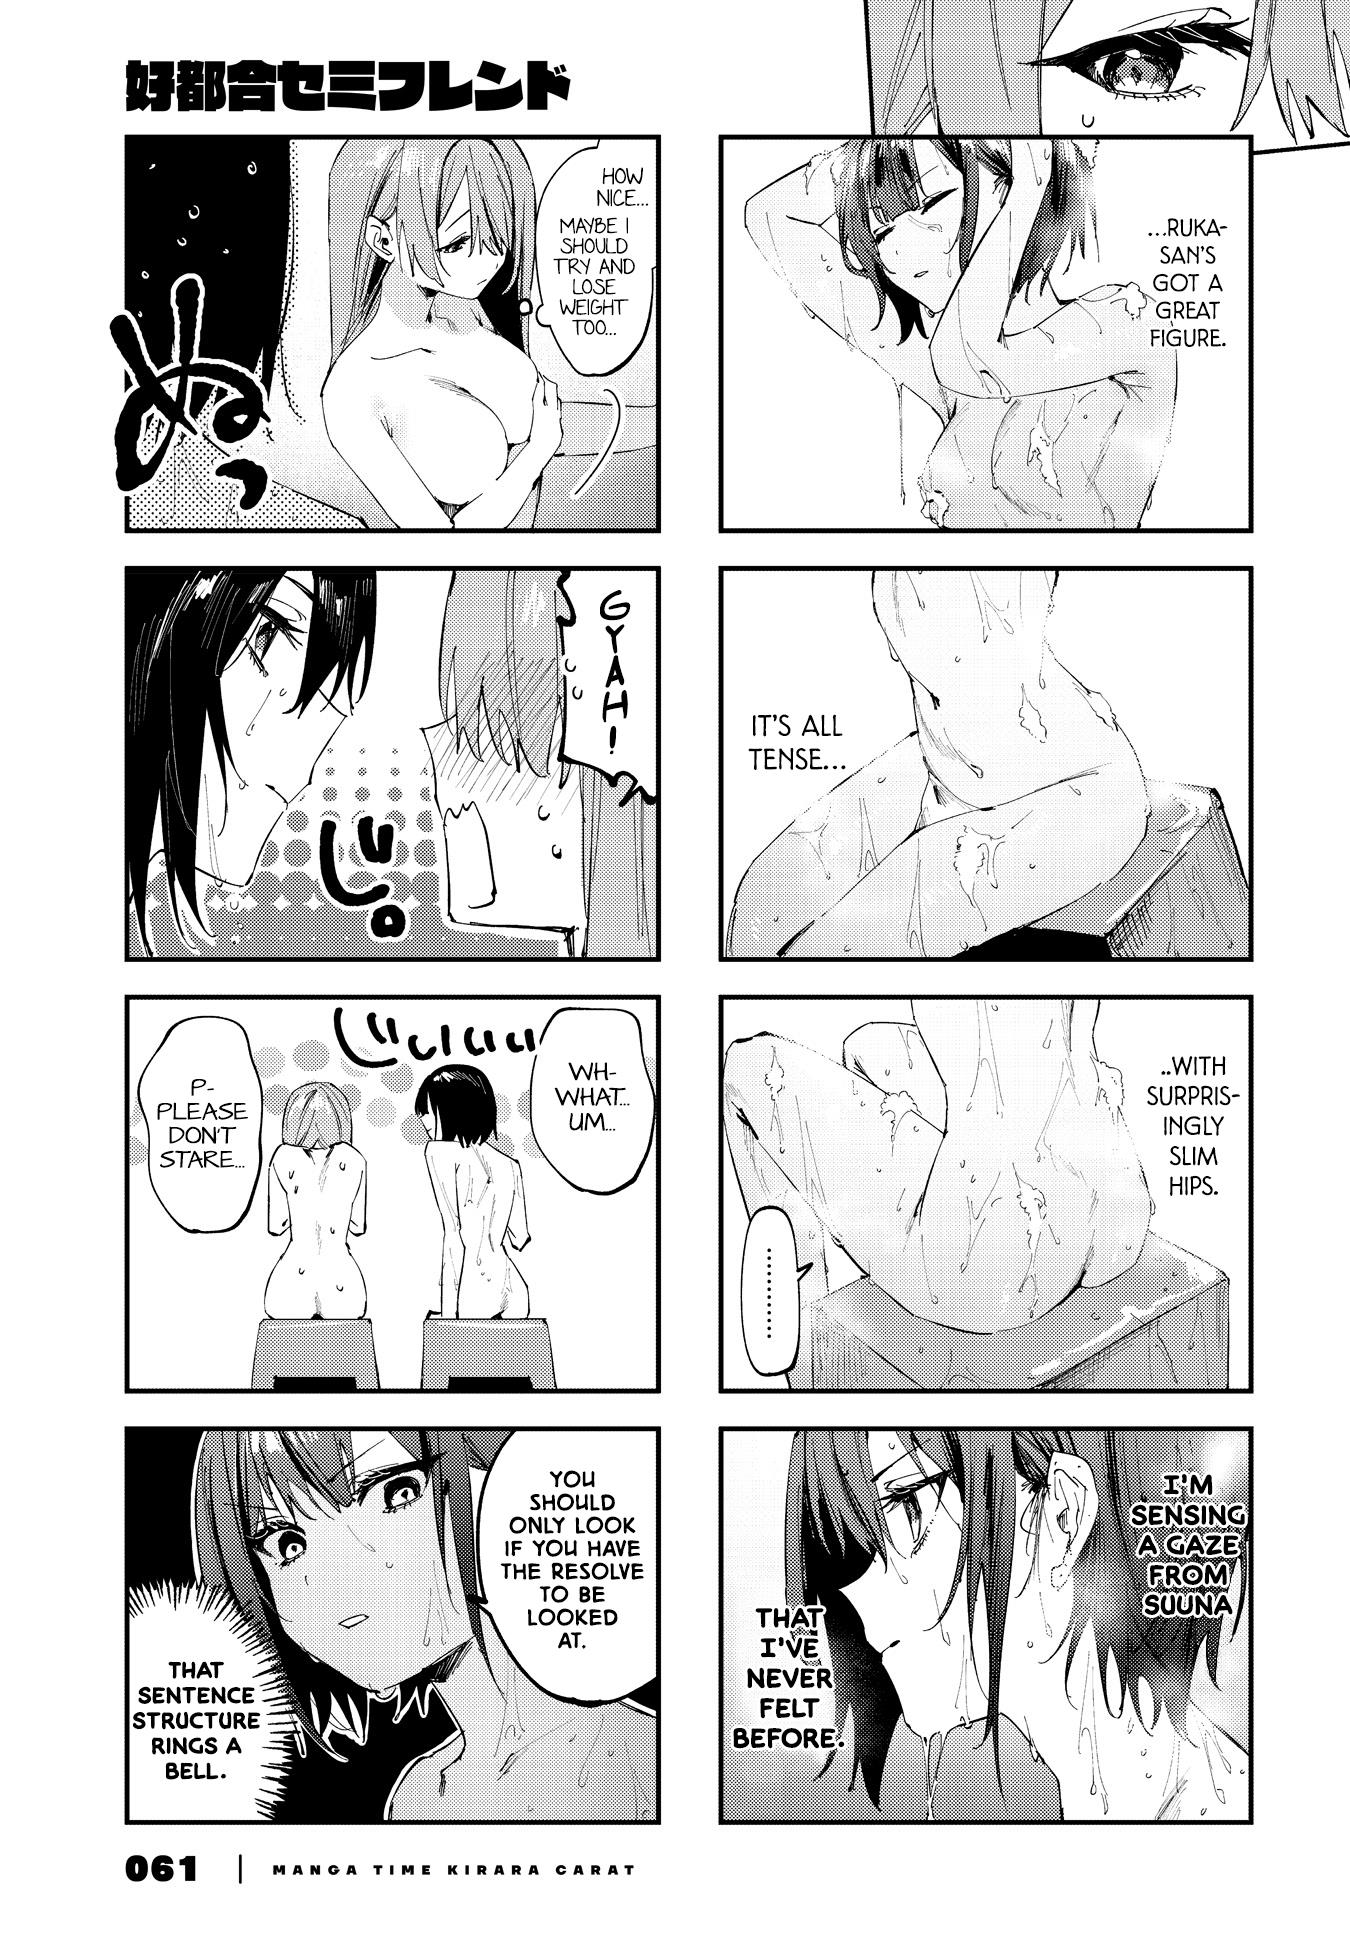 Convenient Semi-Friend Chapter 11.75: Manga Time Kirara Carat Guest Chapter - Picture 3